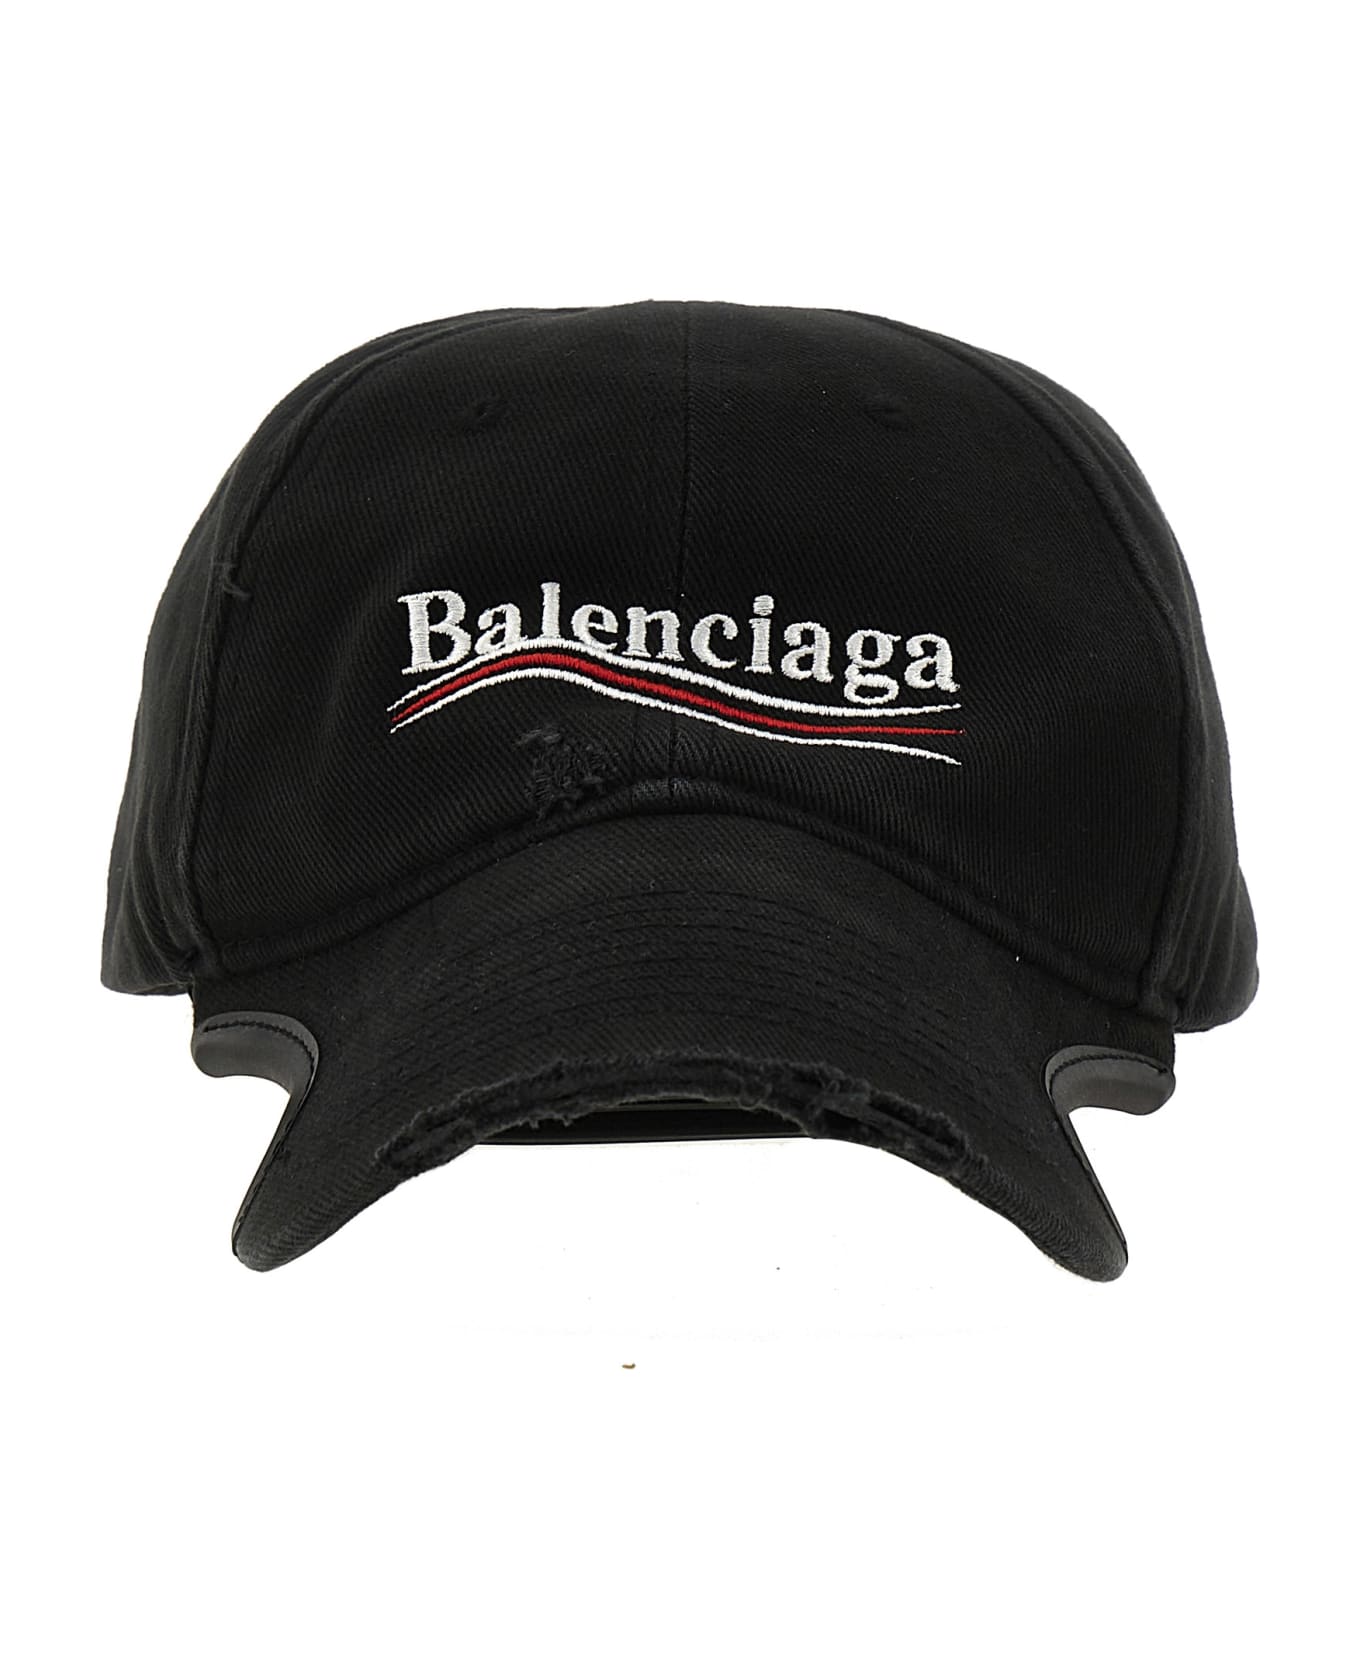 Balenciaga Political Campaign Cap - Black 帽子